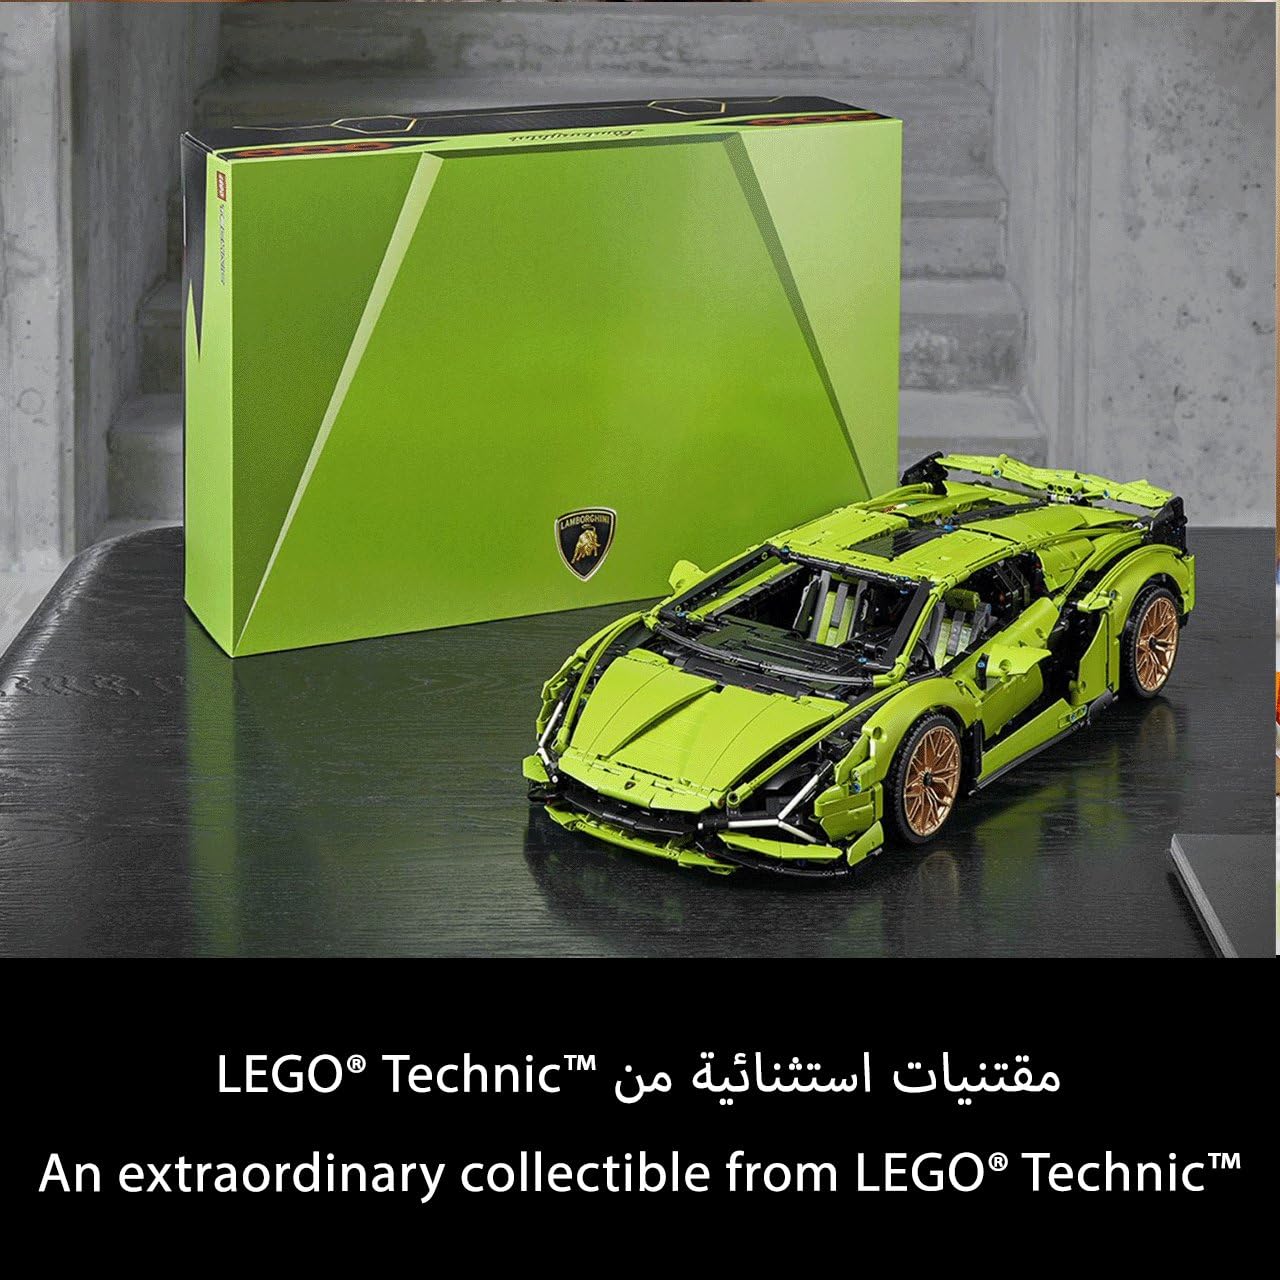 LEGO Technic Lamborghini Sián FKP 37 42115, for 18 year +